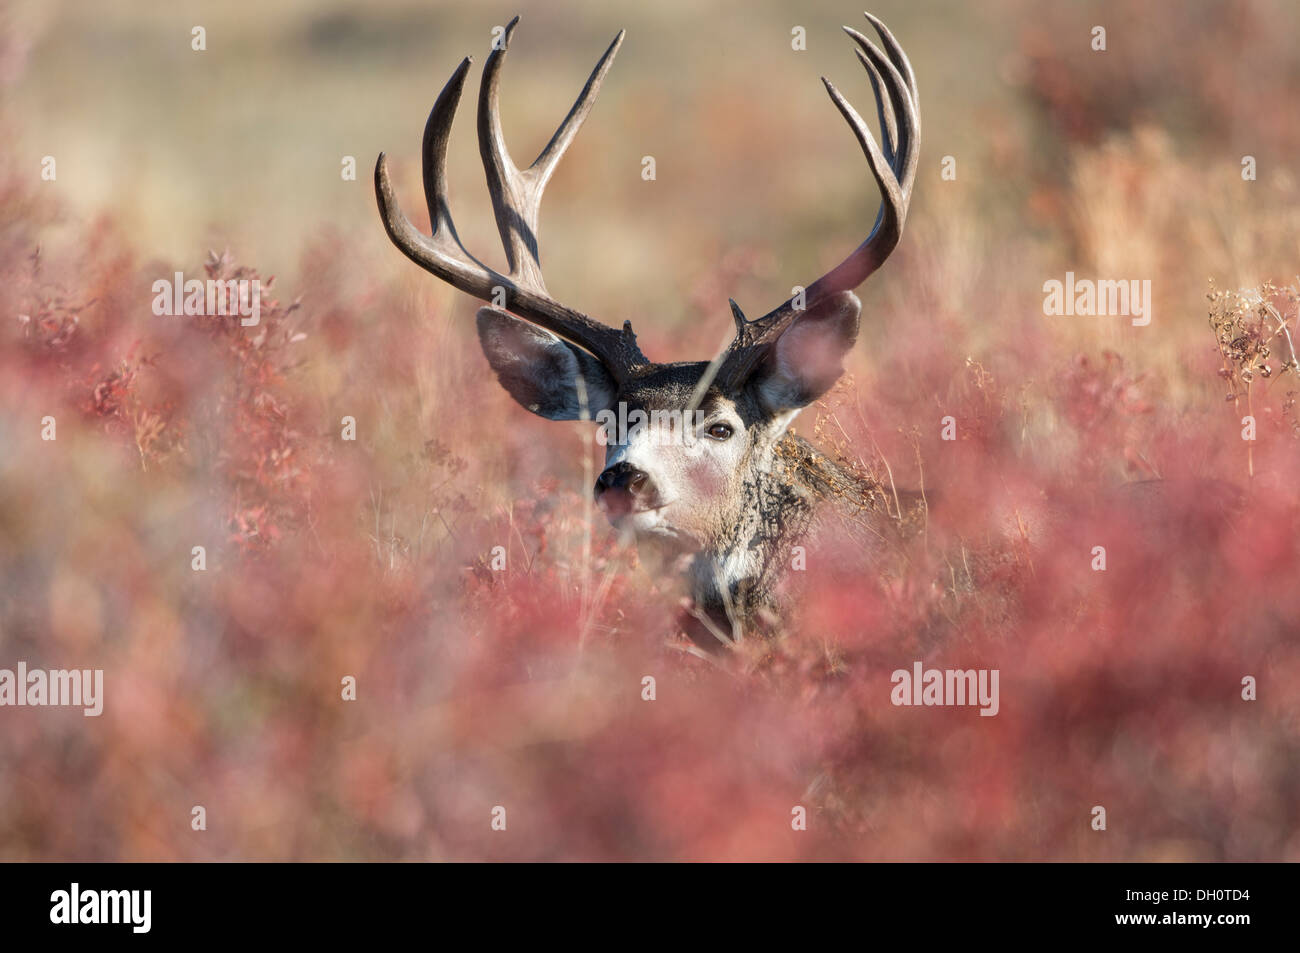 A mule deer buck (Odocoileus hemionus) hides in Autumnal foliage, Western Montana Stock Photo